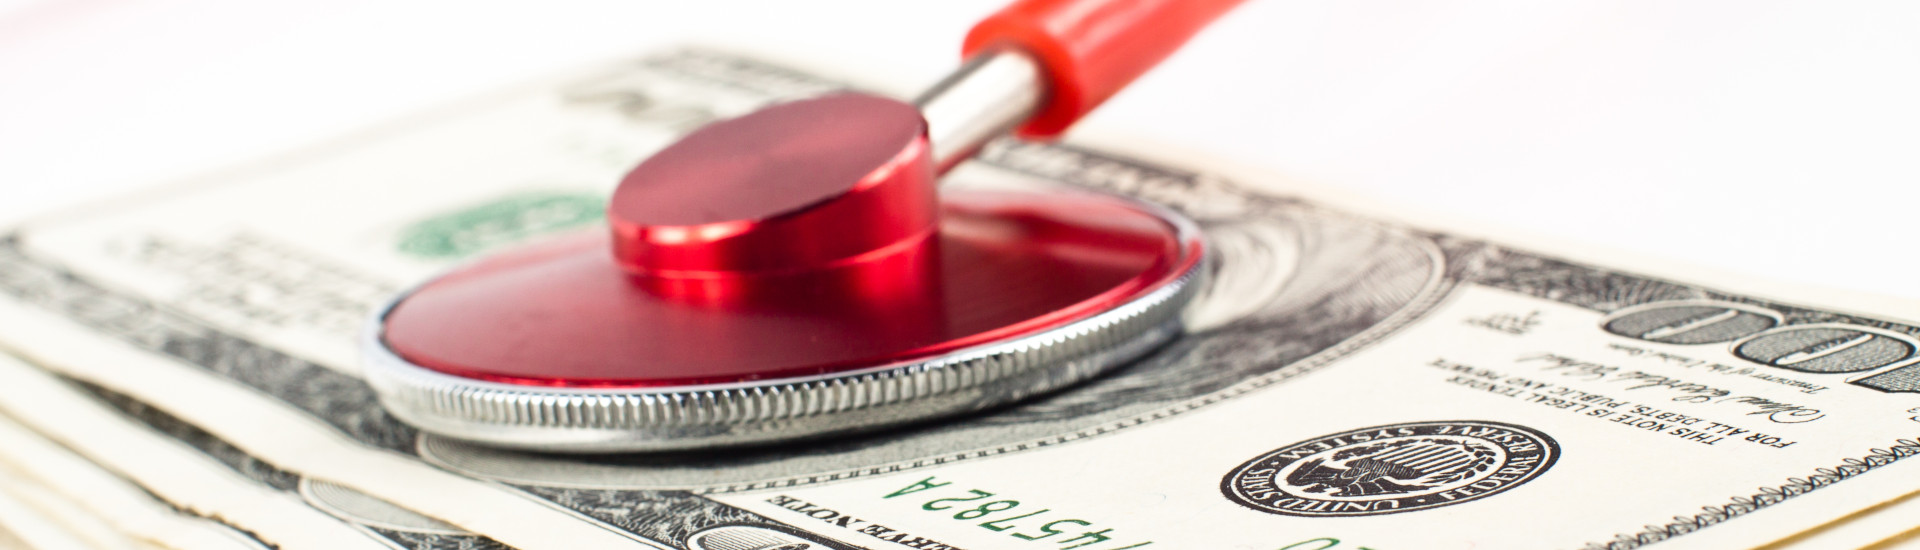 4 Ways to Increase Home Healthcare Profitability